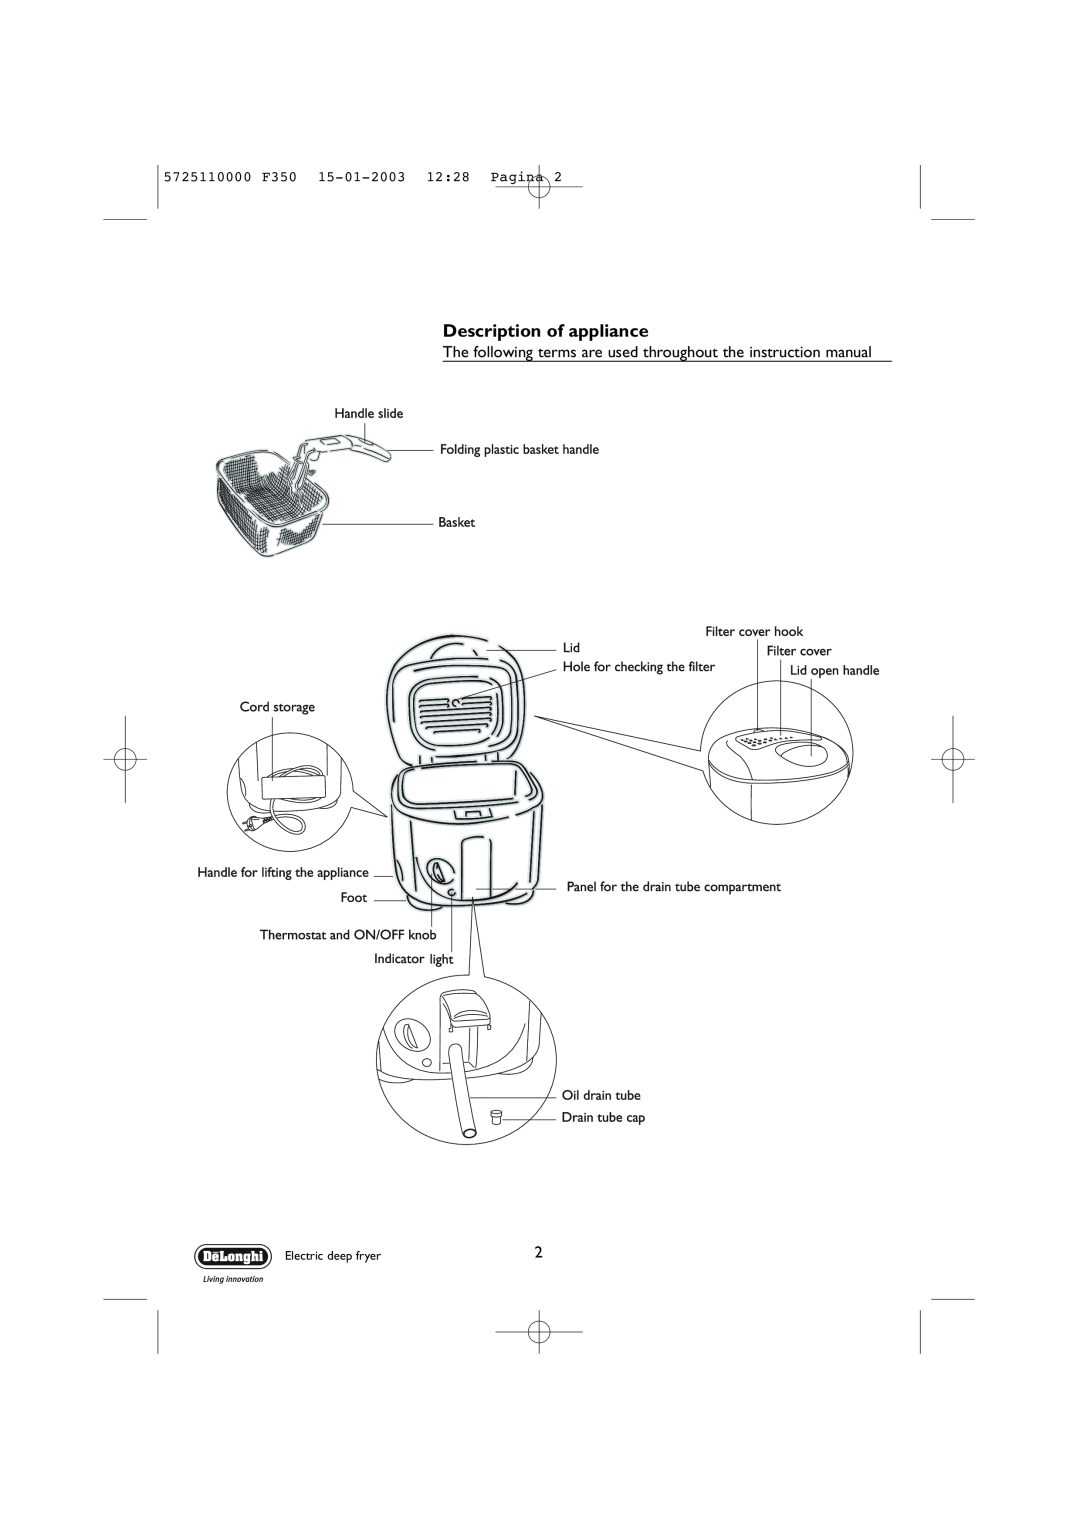 DeLonghi manual Description of appliance, 5725110000 F350 15-01-2003 1228 Pagina, Electric deep fryer 